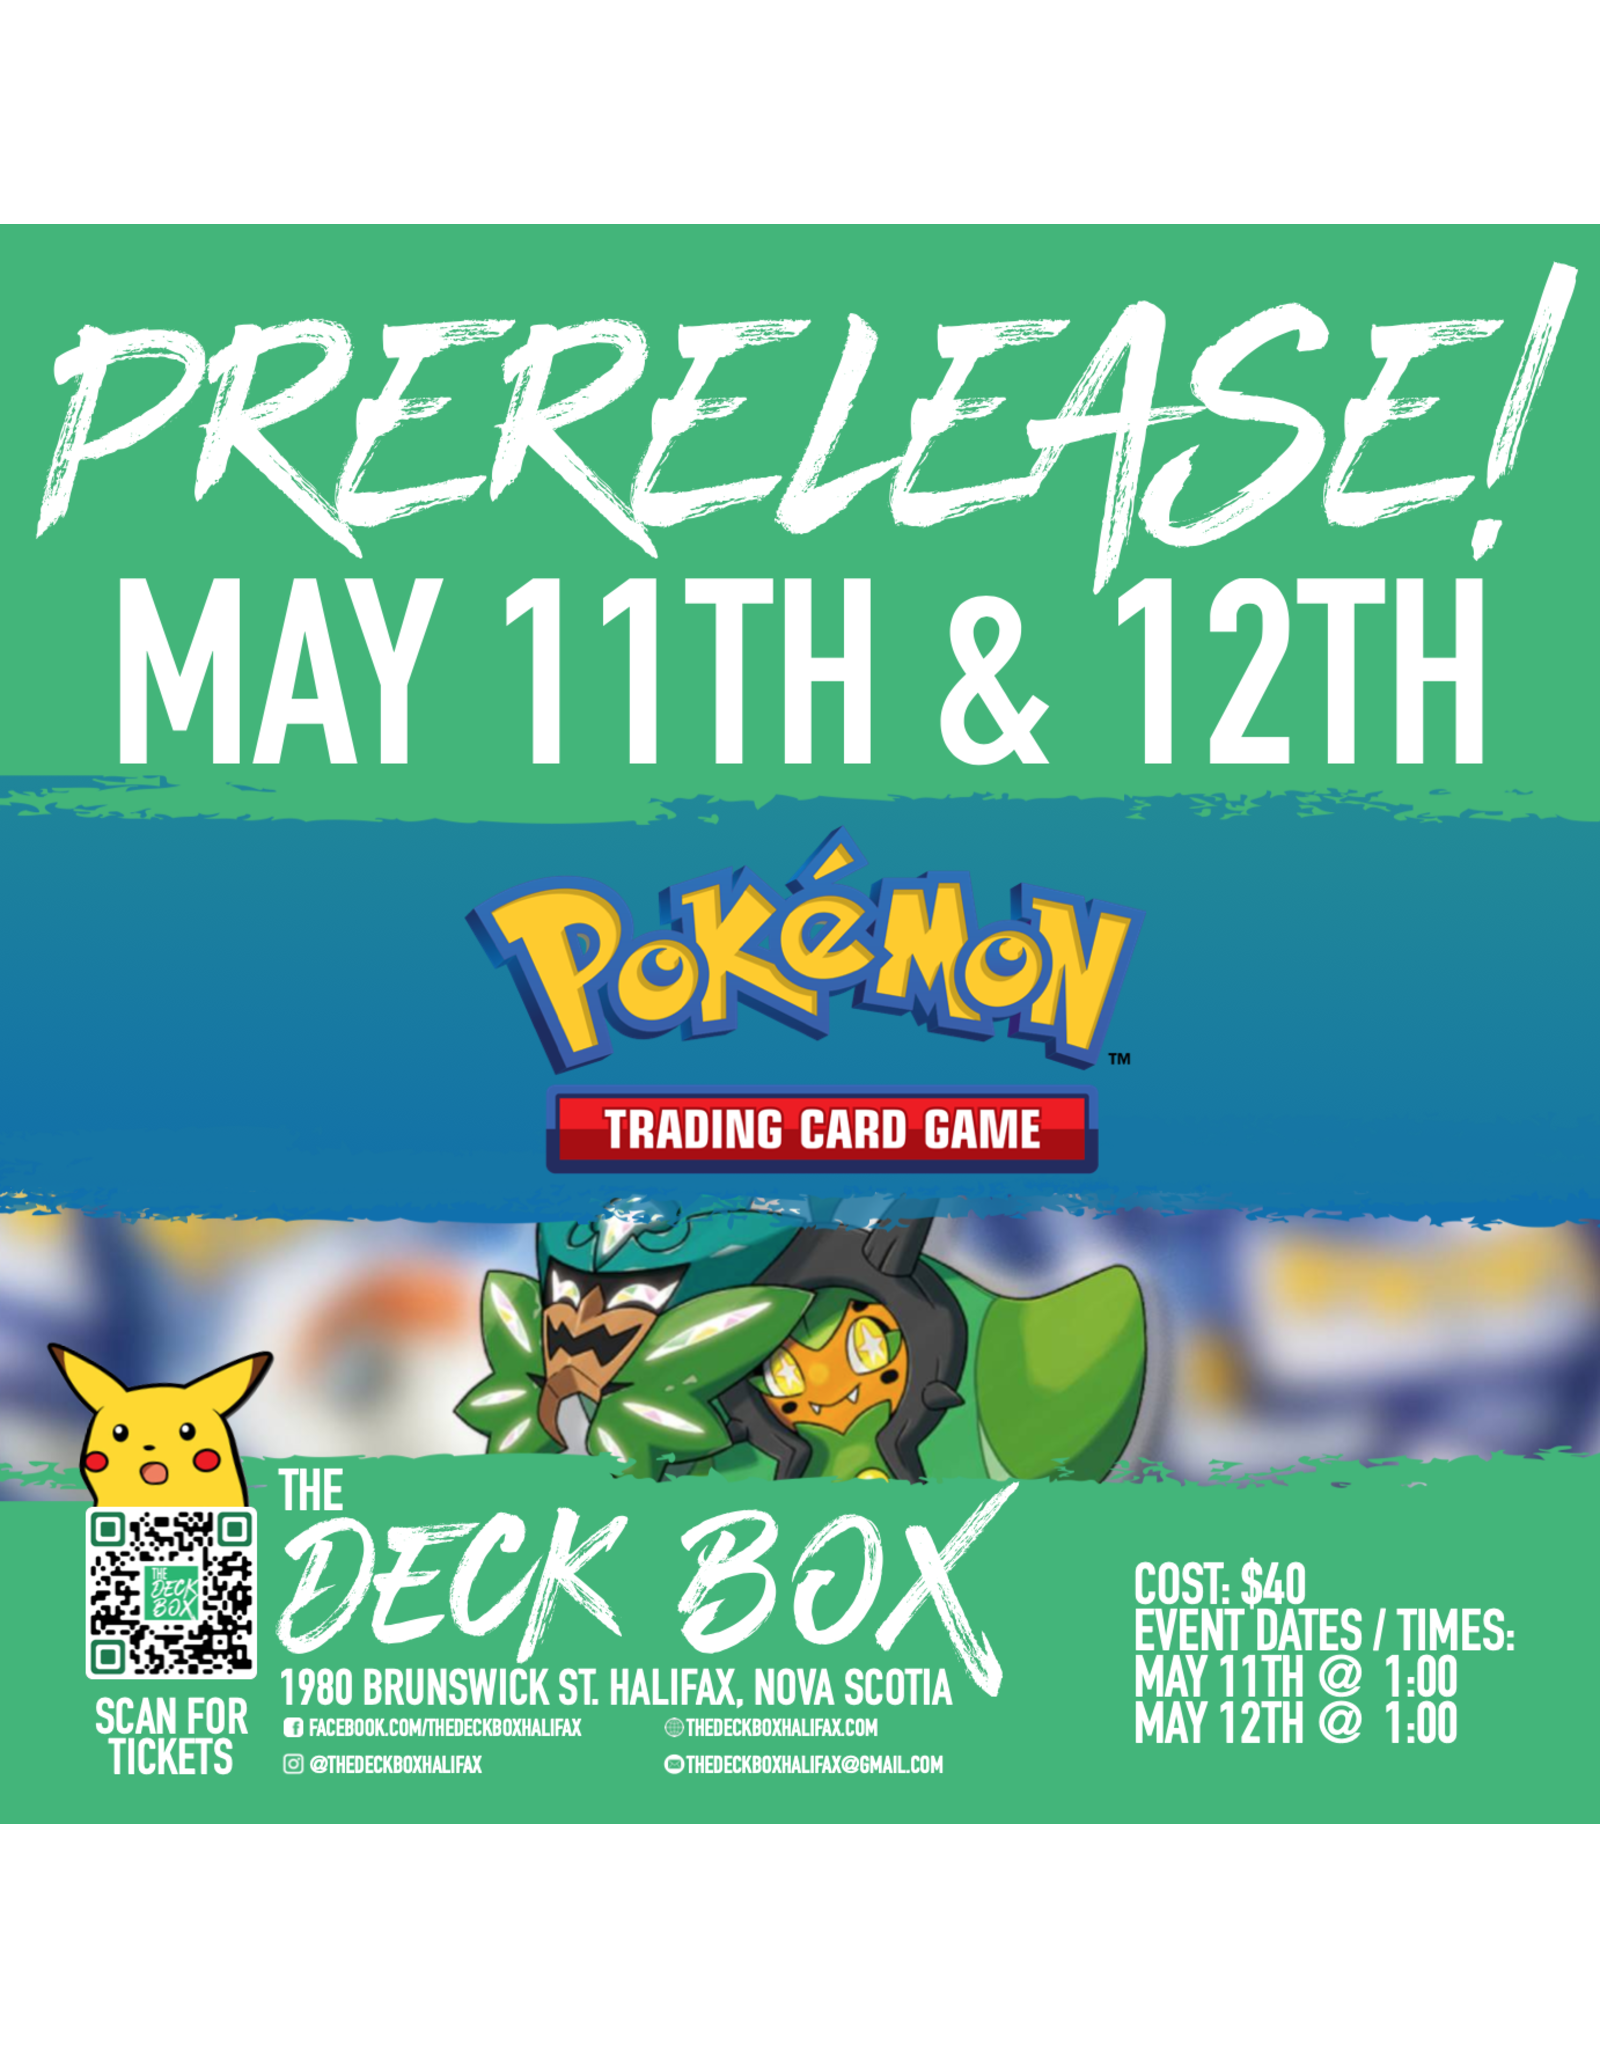 Events (Sunday May 12th @ 1:00) Pokemon Prerelease! Twilight Masquerade